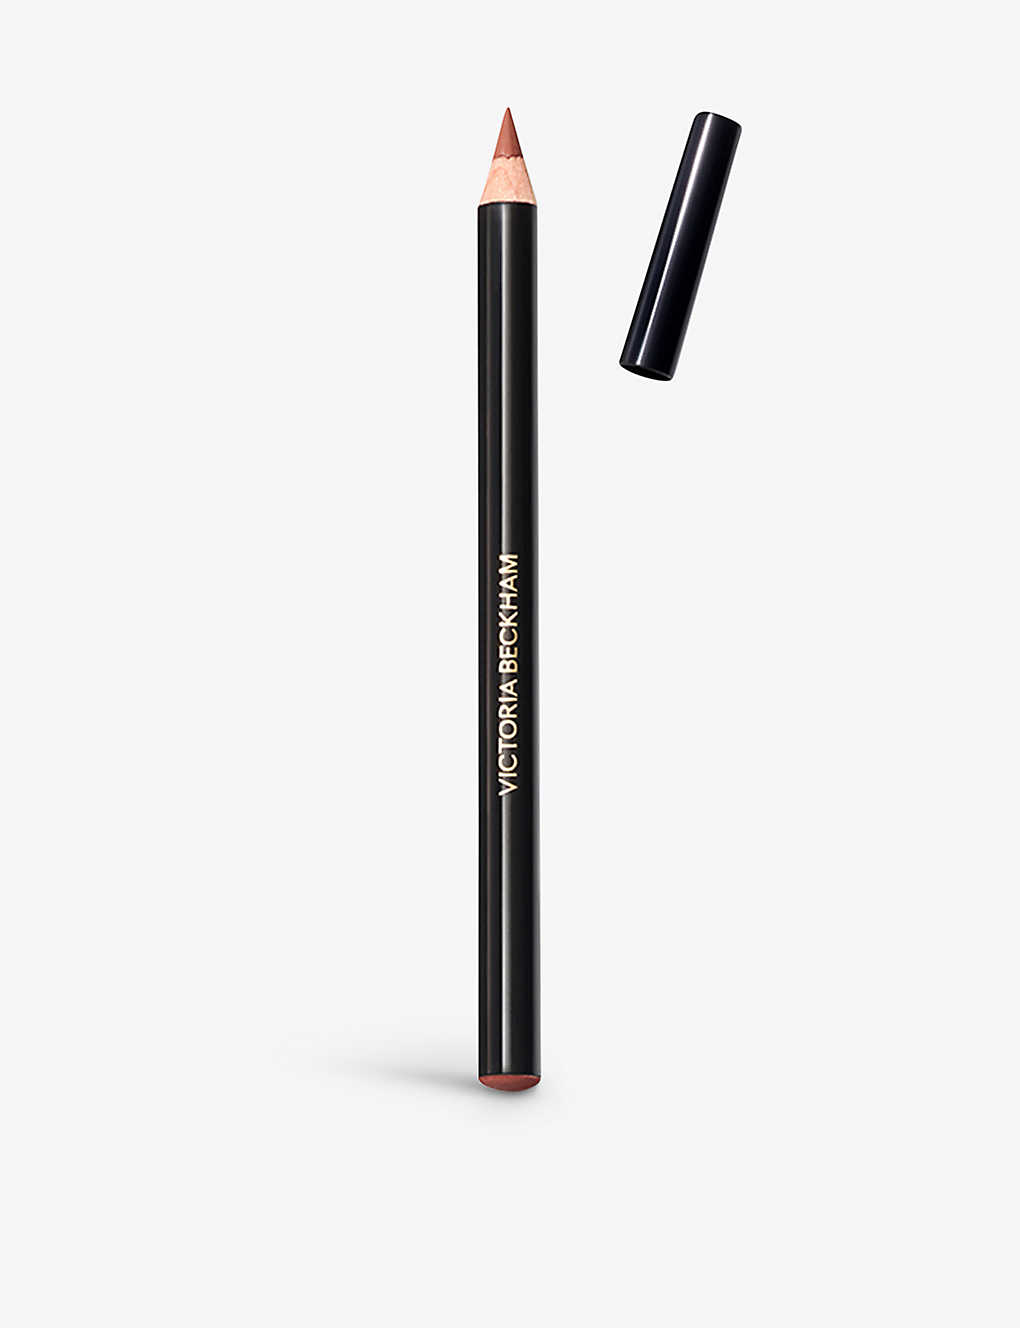 Victoria Beckham Beauty 2 Lip Definer Lip Pencil 1.1g In Multi-coloured